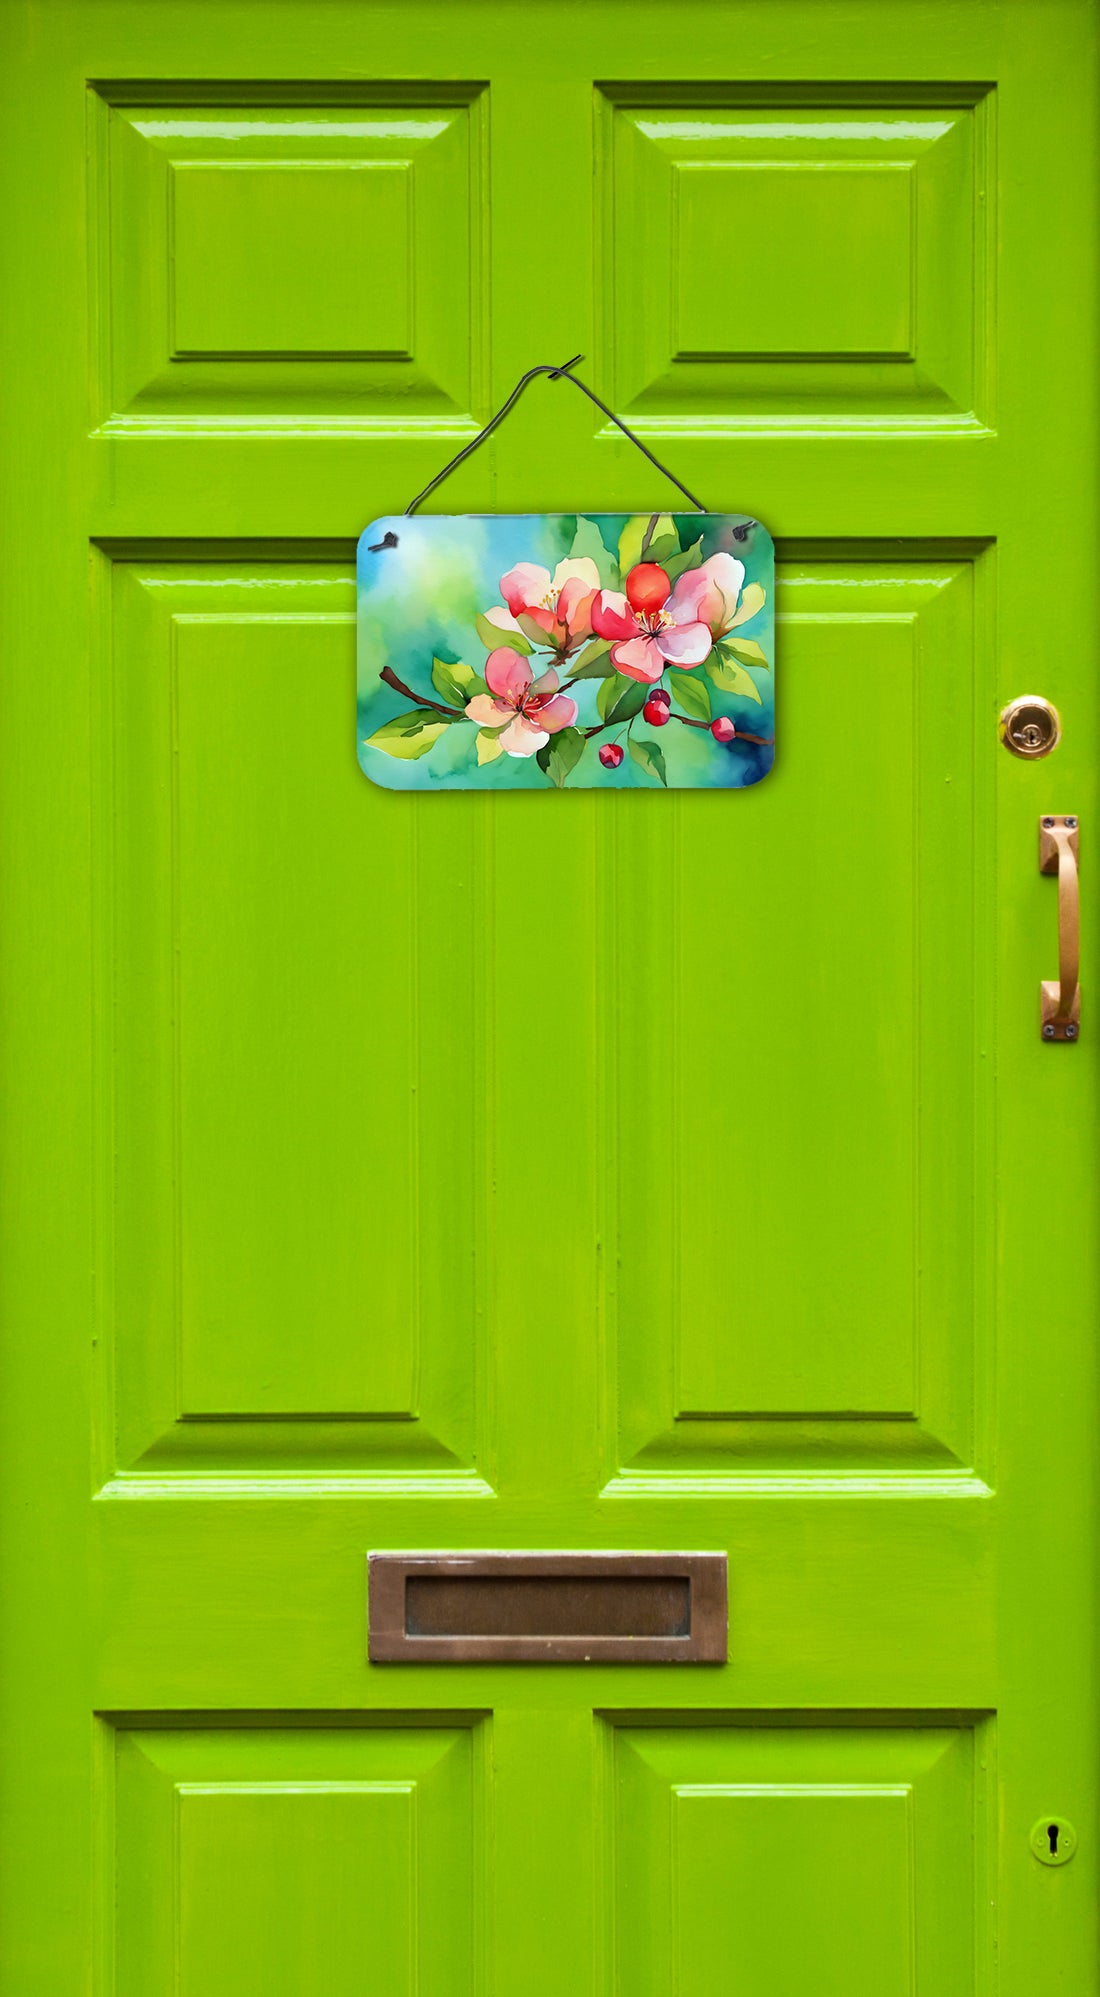 Buy this Arkansas Apple Blossom in Watercolor Wall or Door Hanging Prints